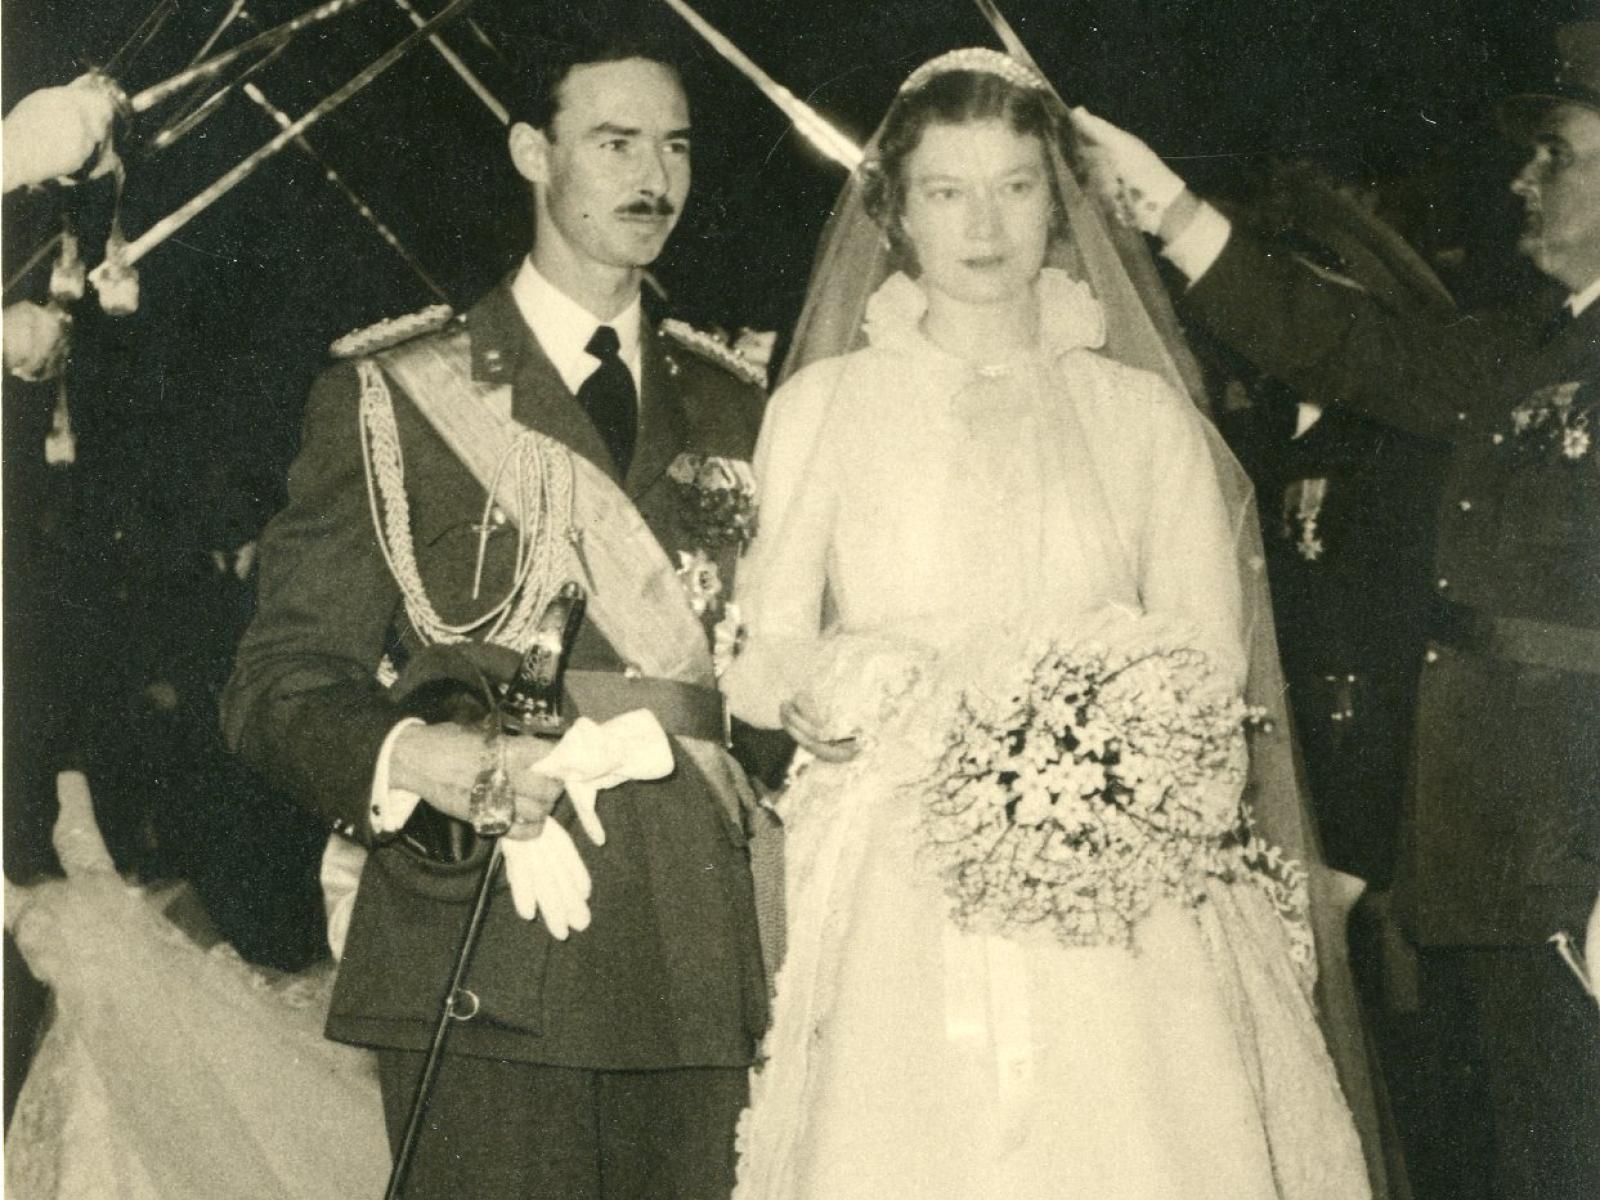 Princely Wedding: Prince Jean and Princess Josephine-Charlotte